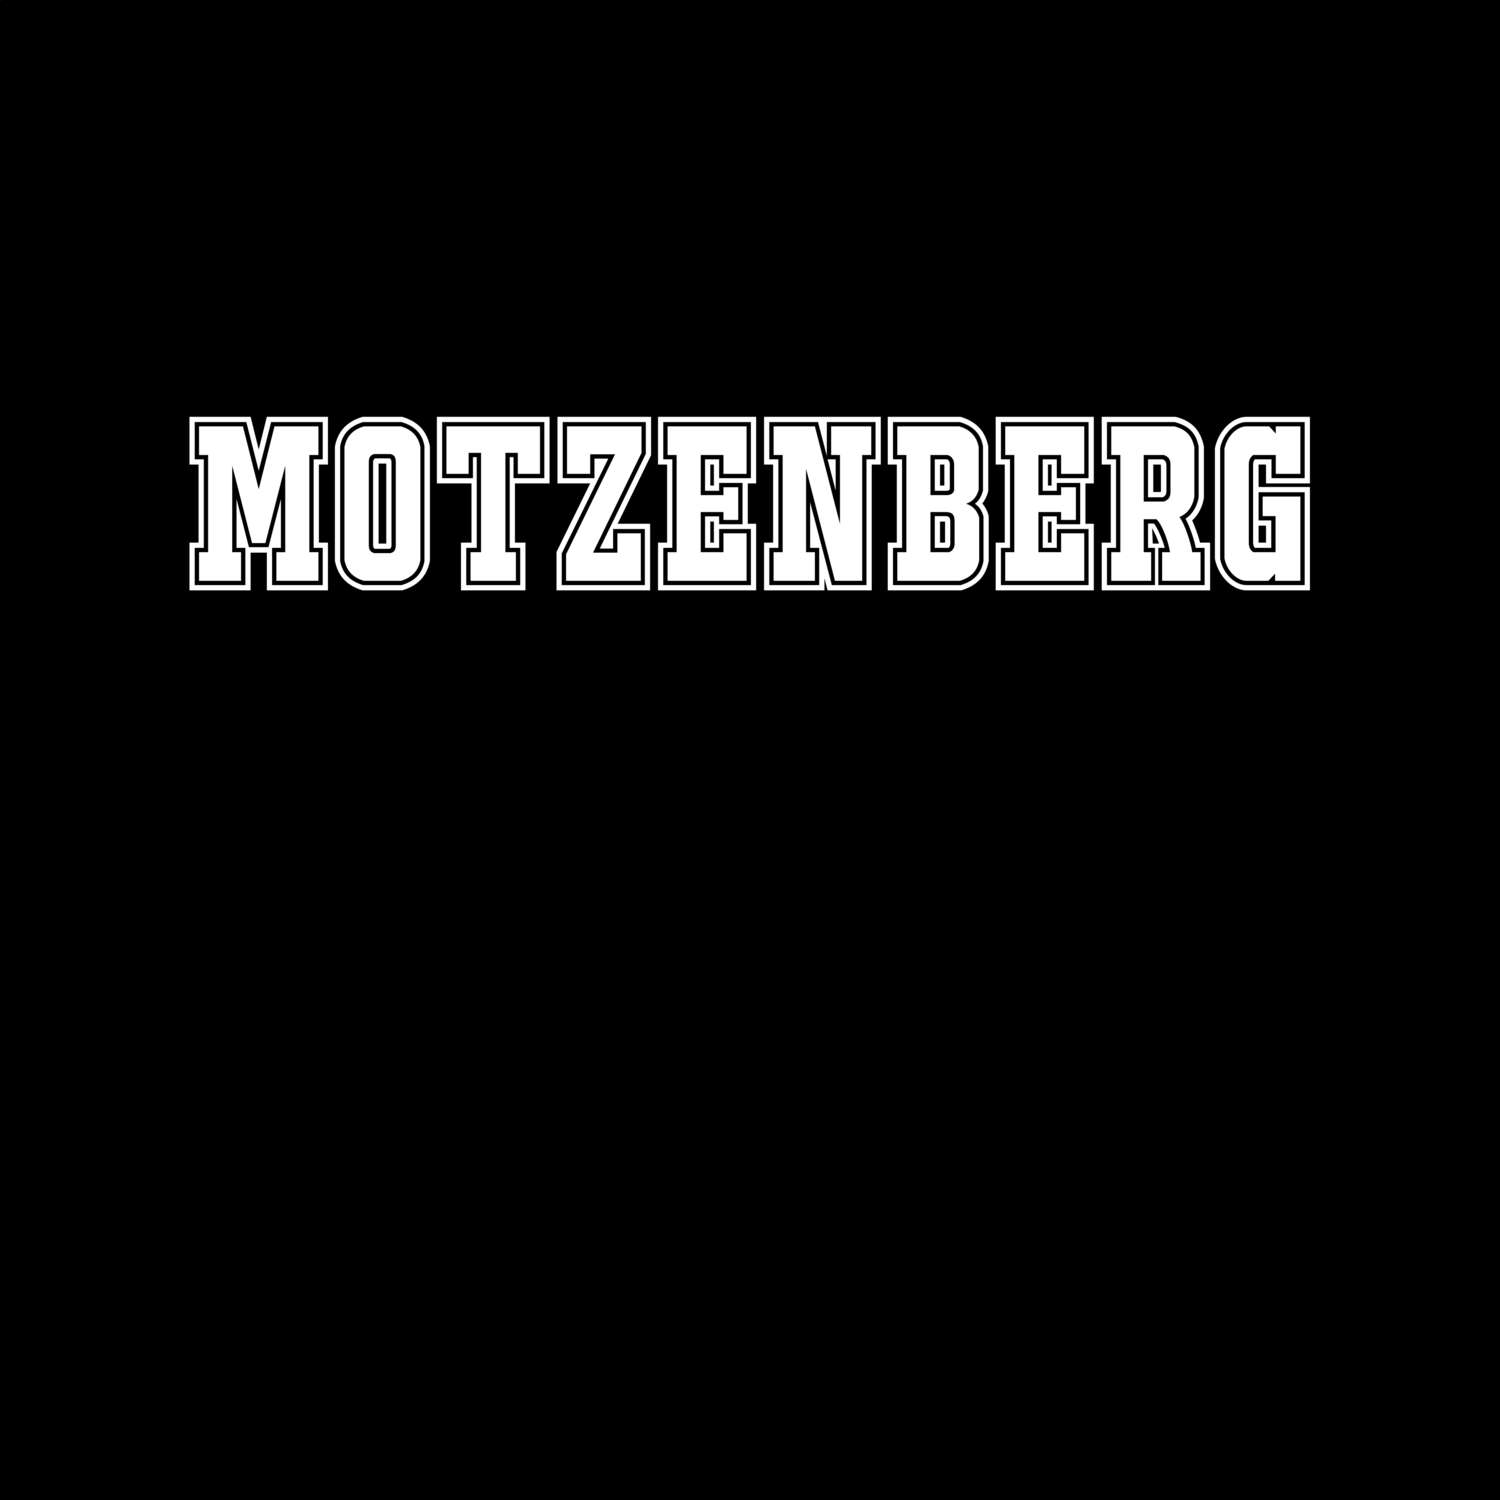 Motzenberg T-Shirt »Classic«